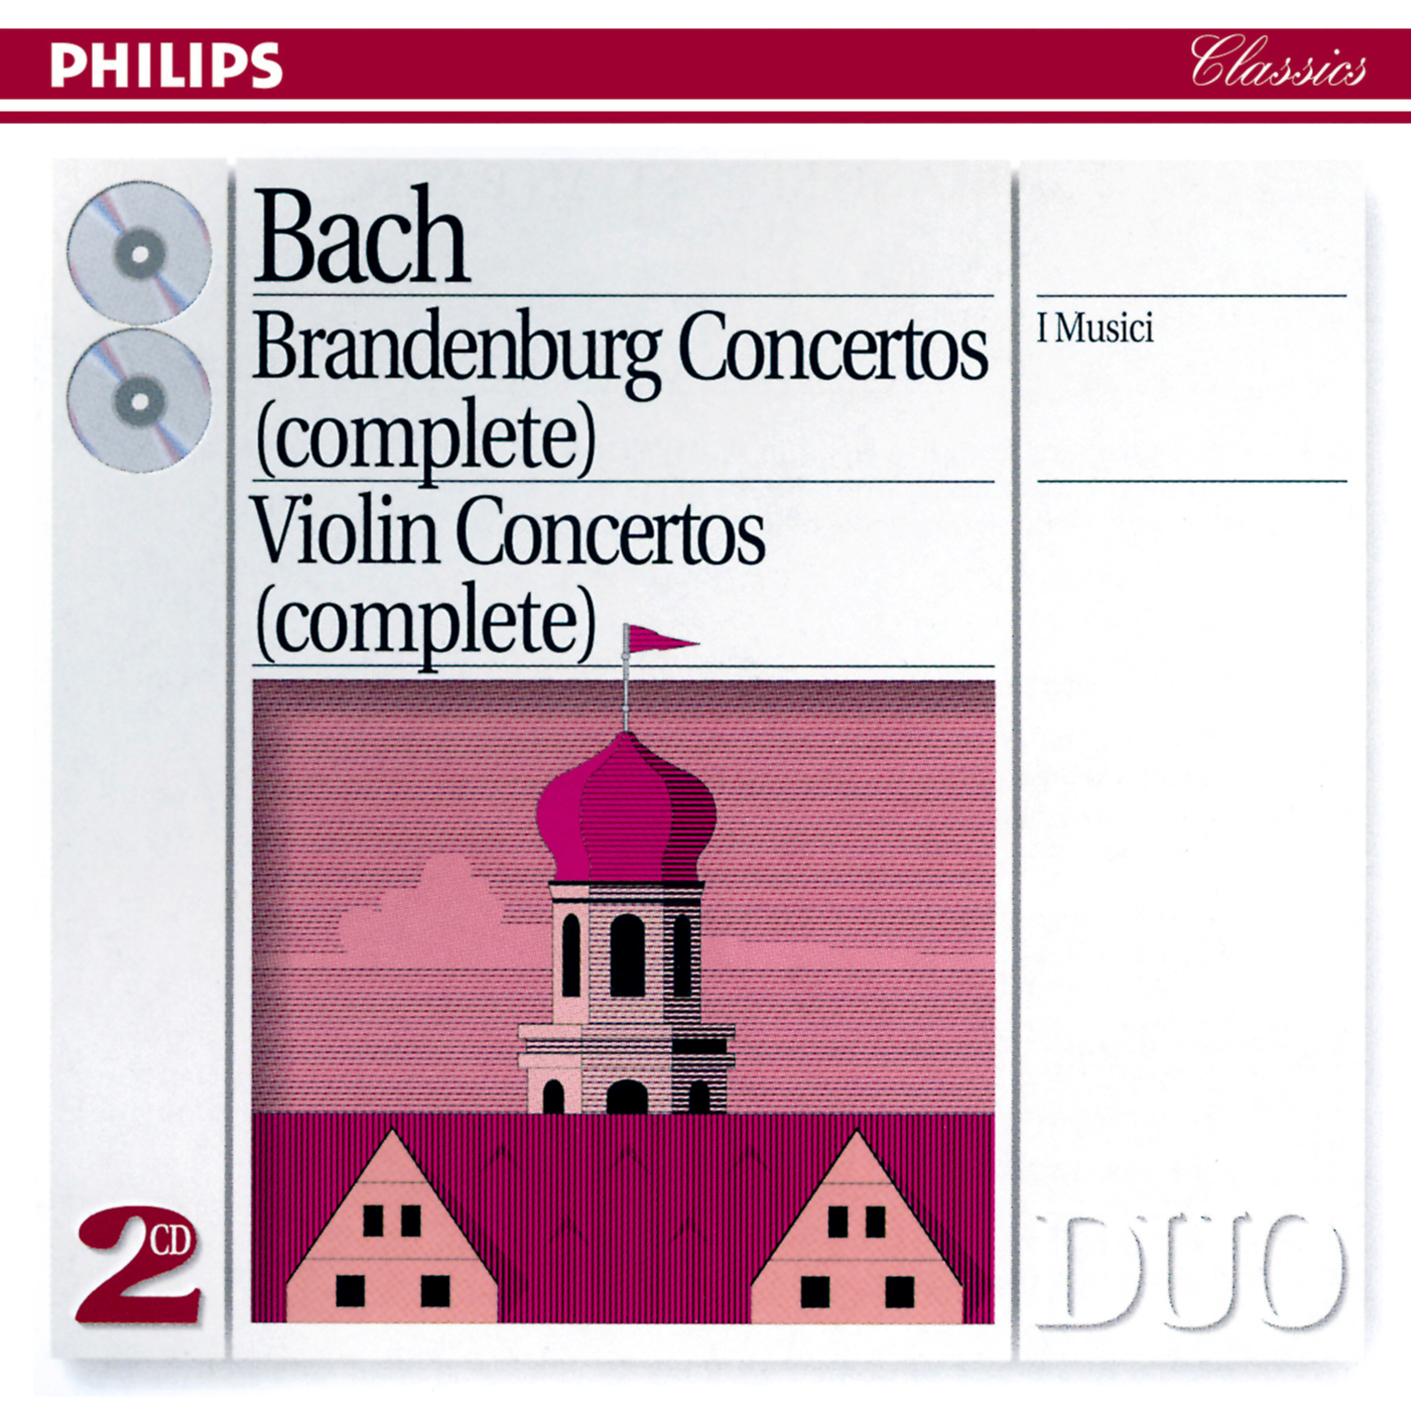 I Musici - Brandenburg Concerto No.1 in F, BWV 1046:1. (Allegro)